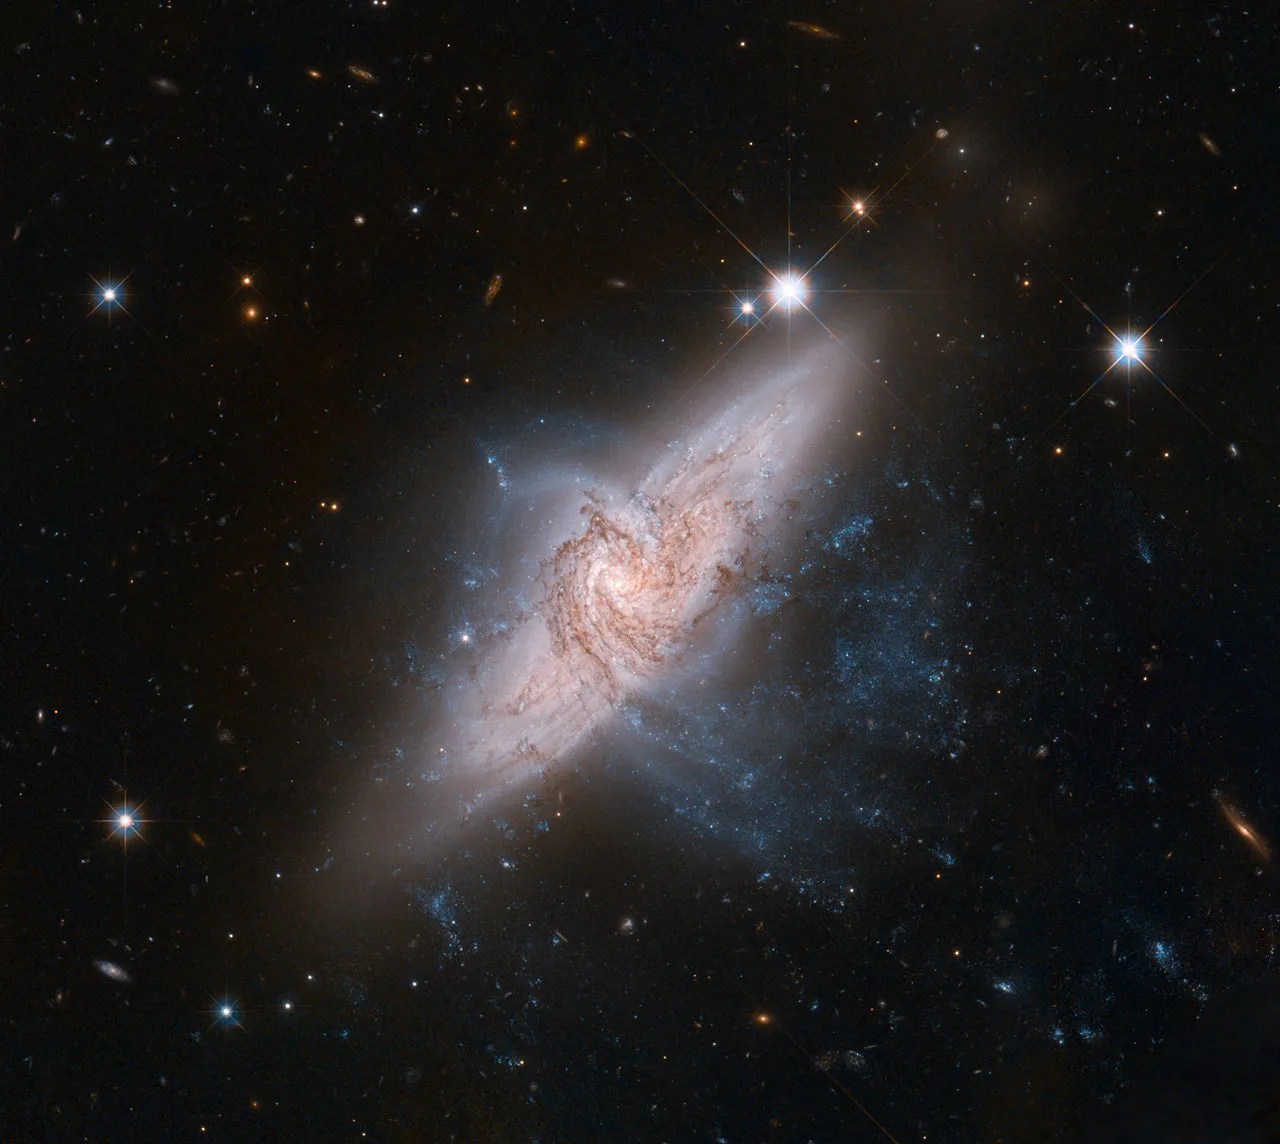 Hubble's Cosmic Collision image